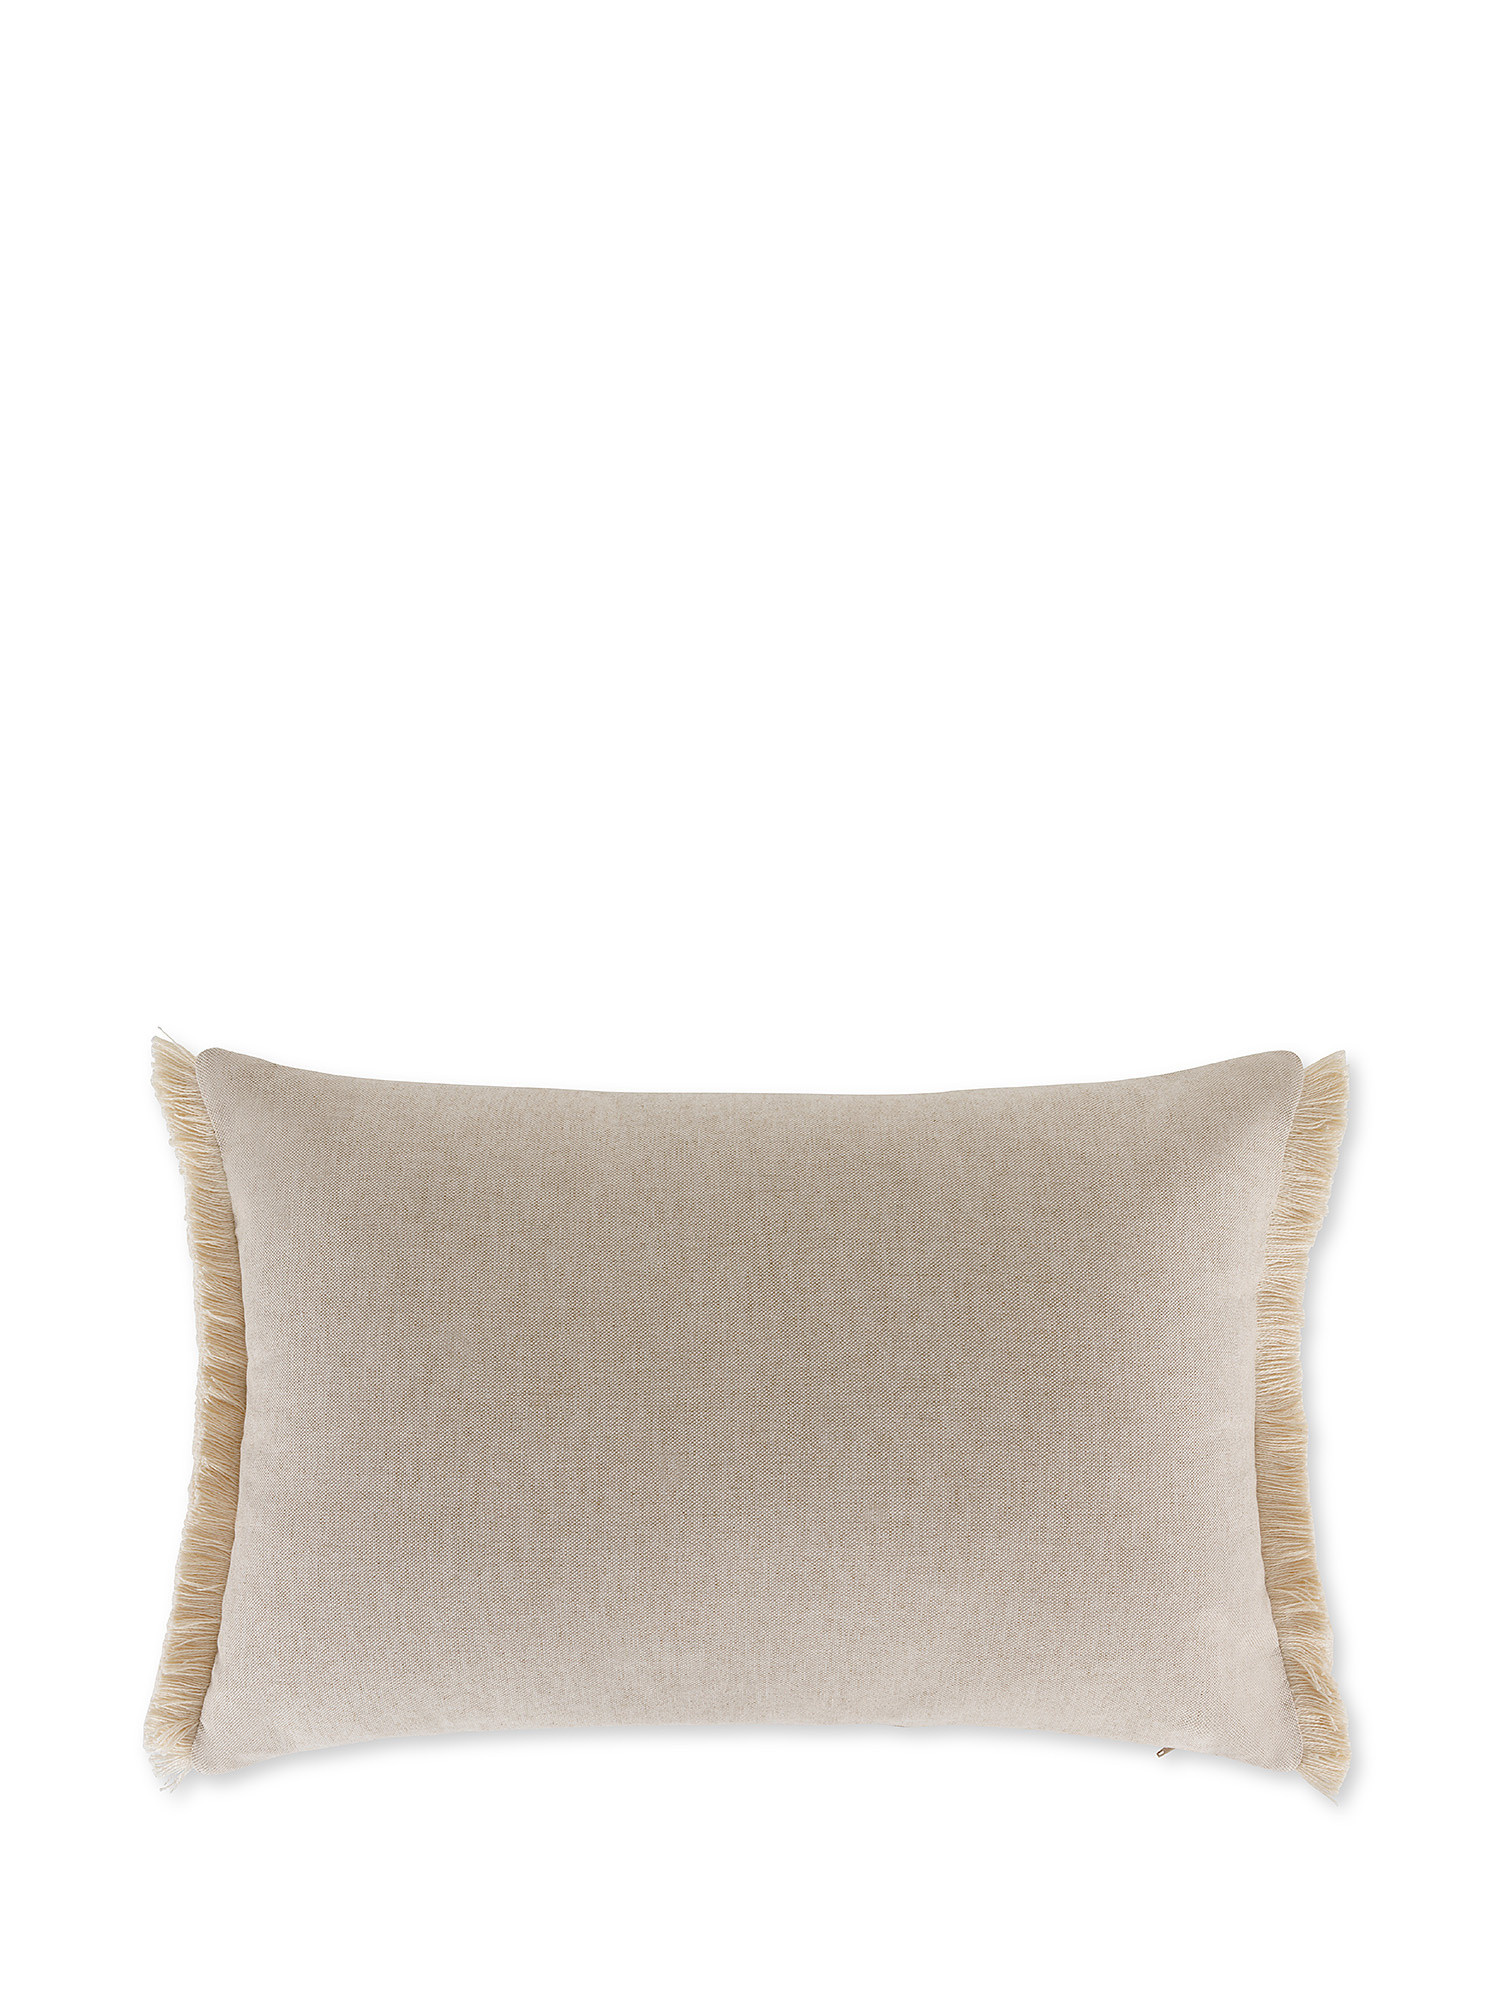 Striped jacquard cushion 35x55cm, Multicolor, large image number 2